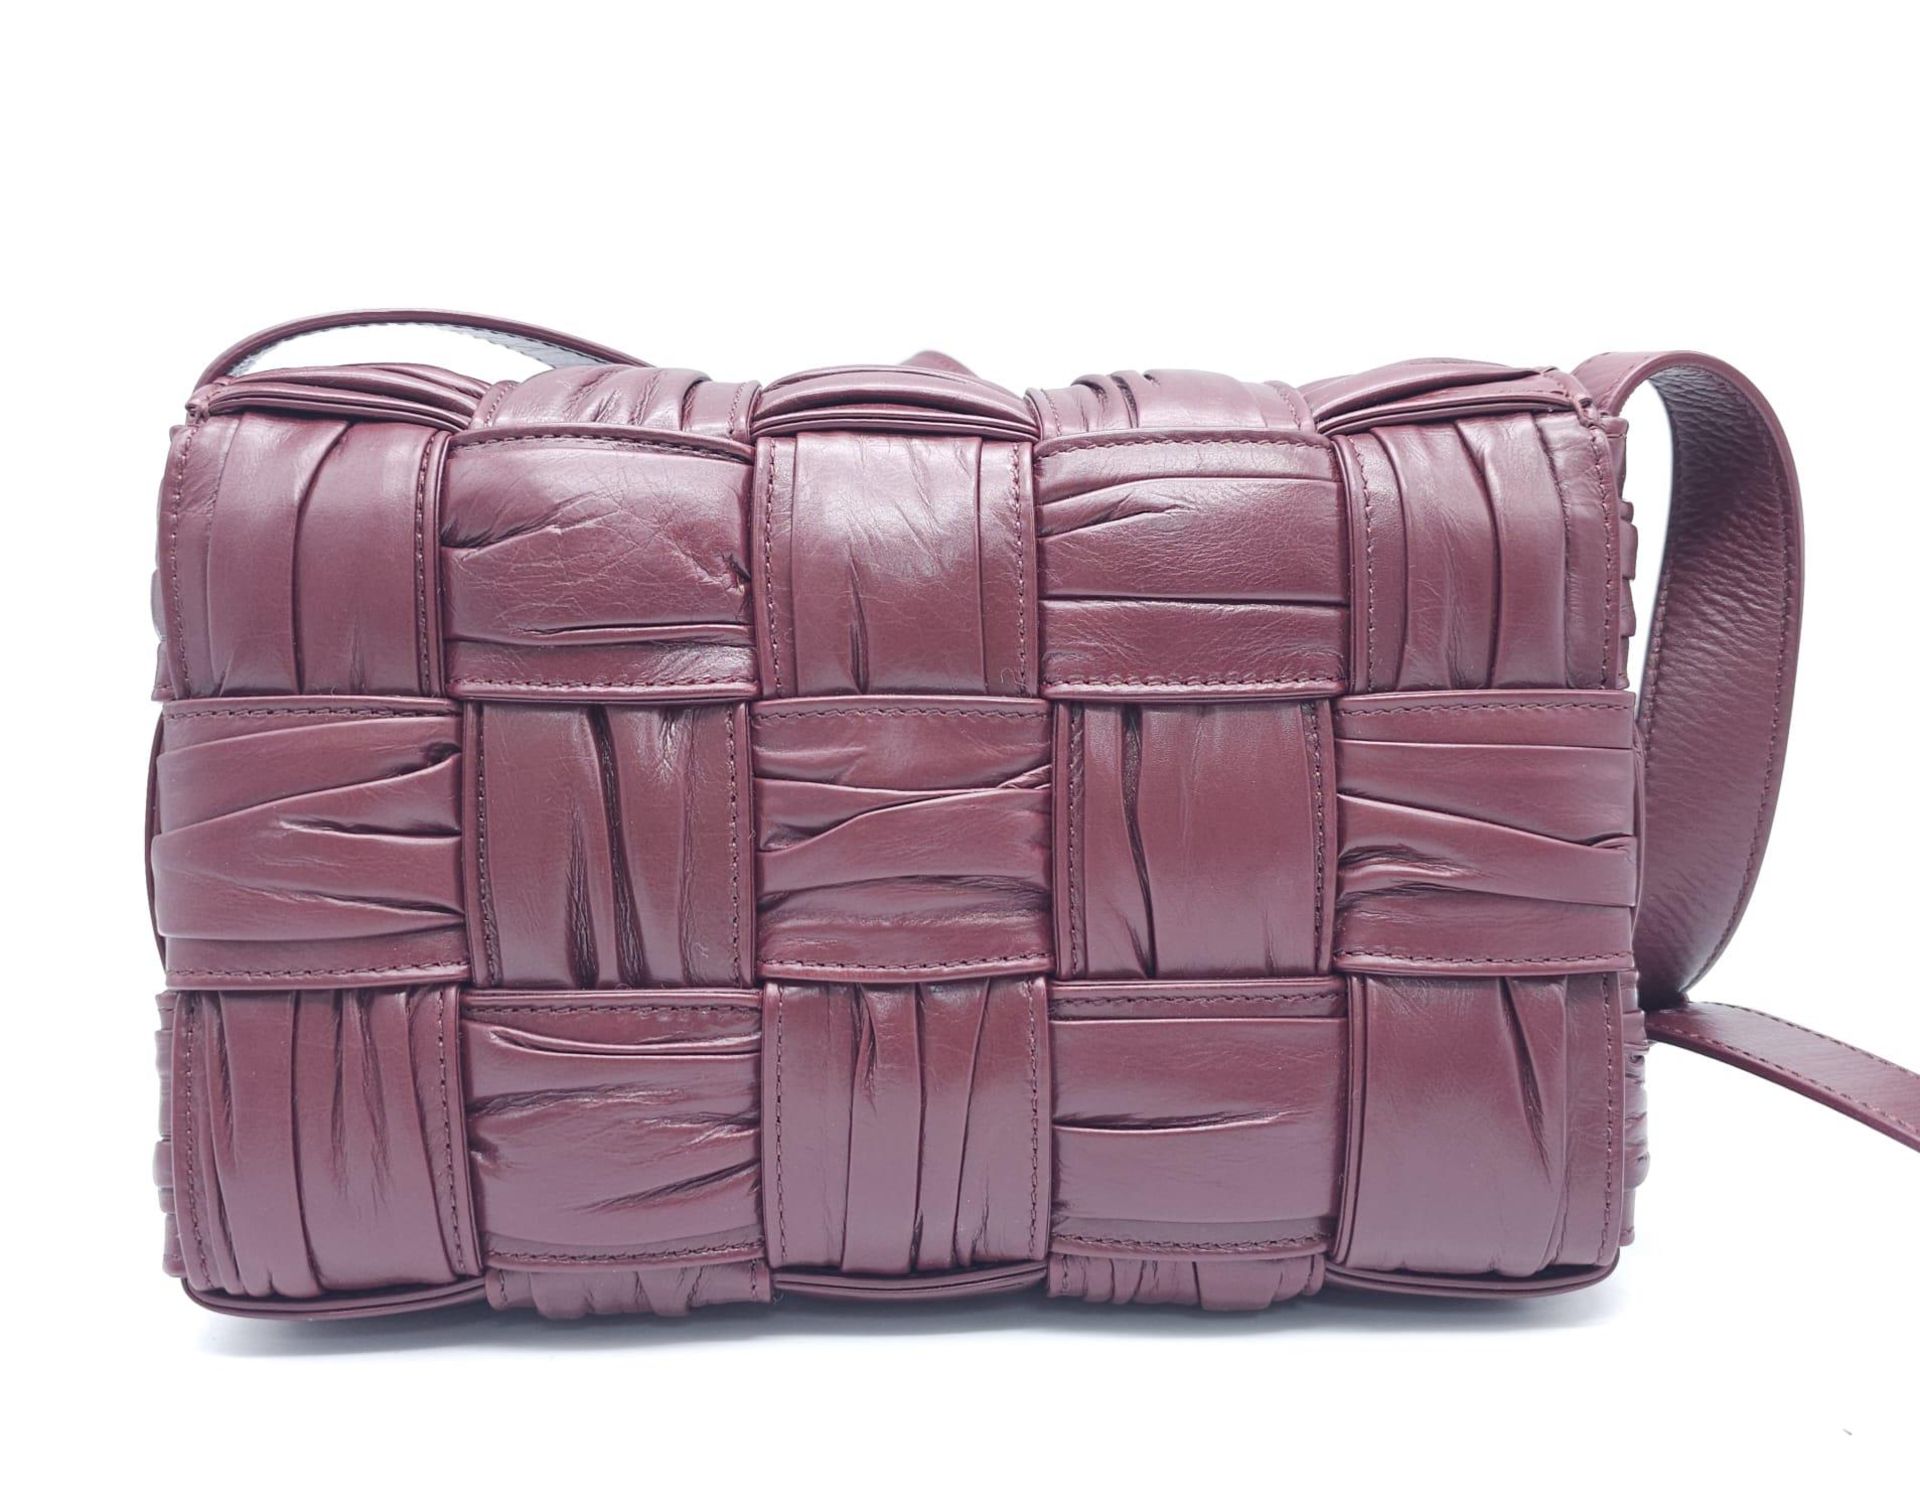 Bottega Veneta Brick Cassette Bag. Smooth burgundy leather, signature orthogonal weaving, adjustable - Image 4 of 12